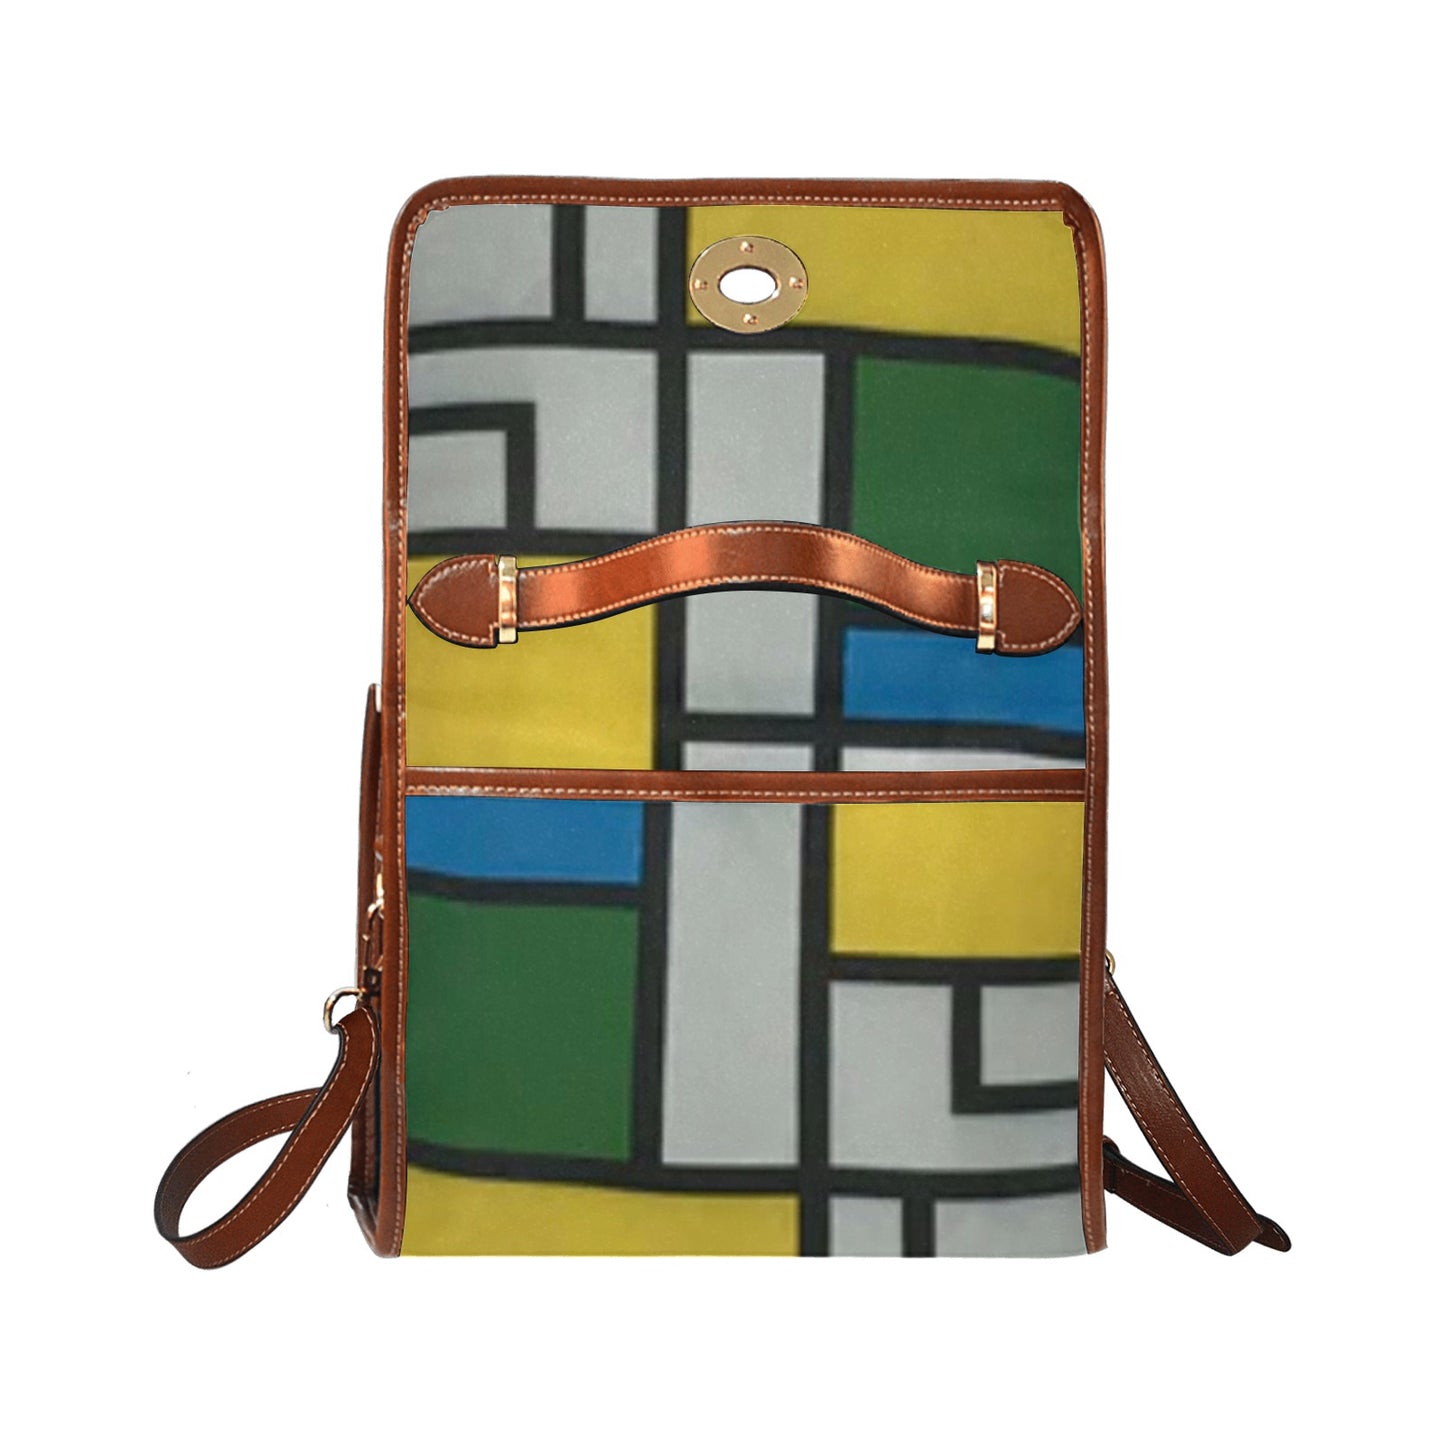 fz handbag multi all over print waterproof canvas bag(model1641)(brown strap)